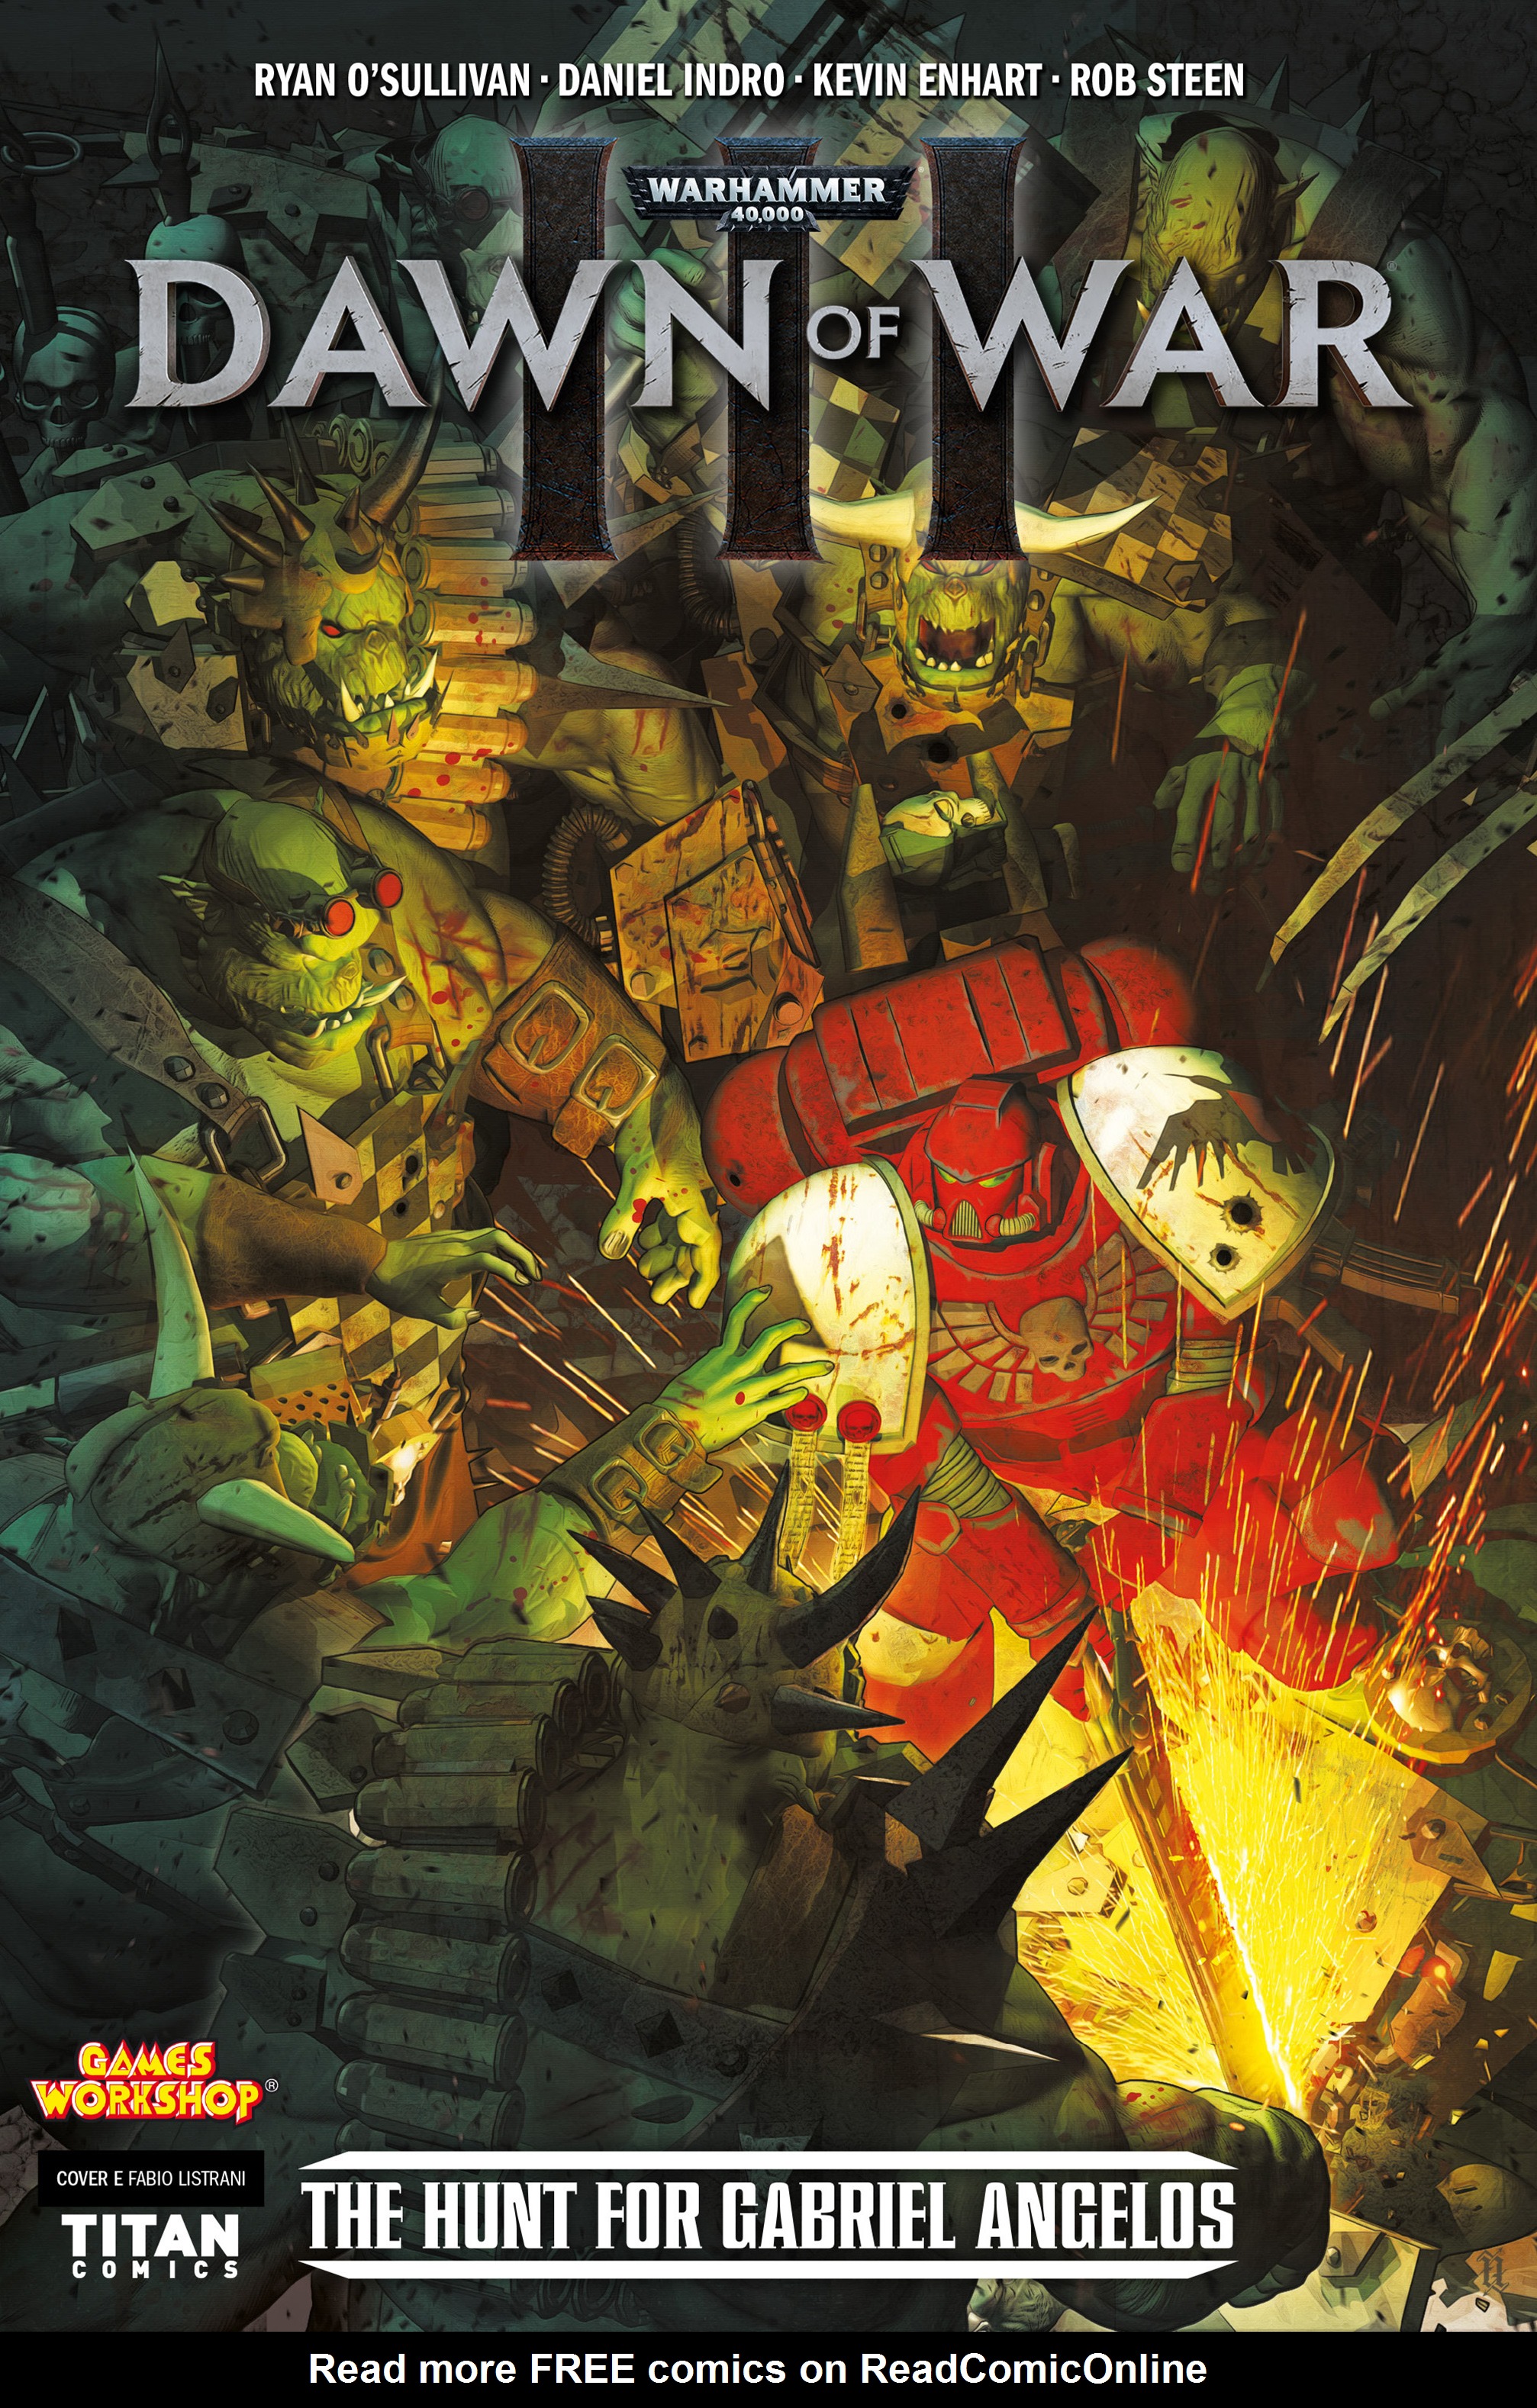 Read online Warhammer 40,000: Dawn of War comic -  Issue #1 - 5